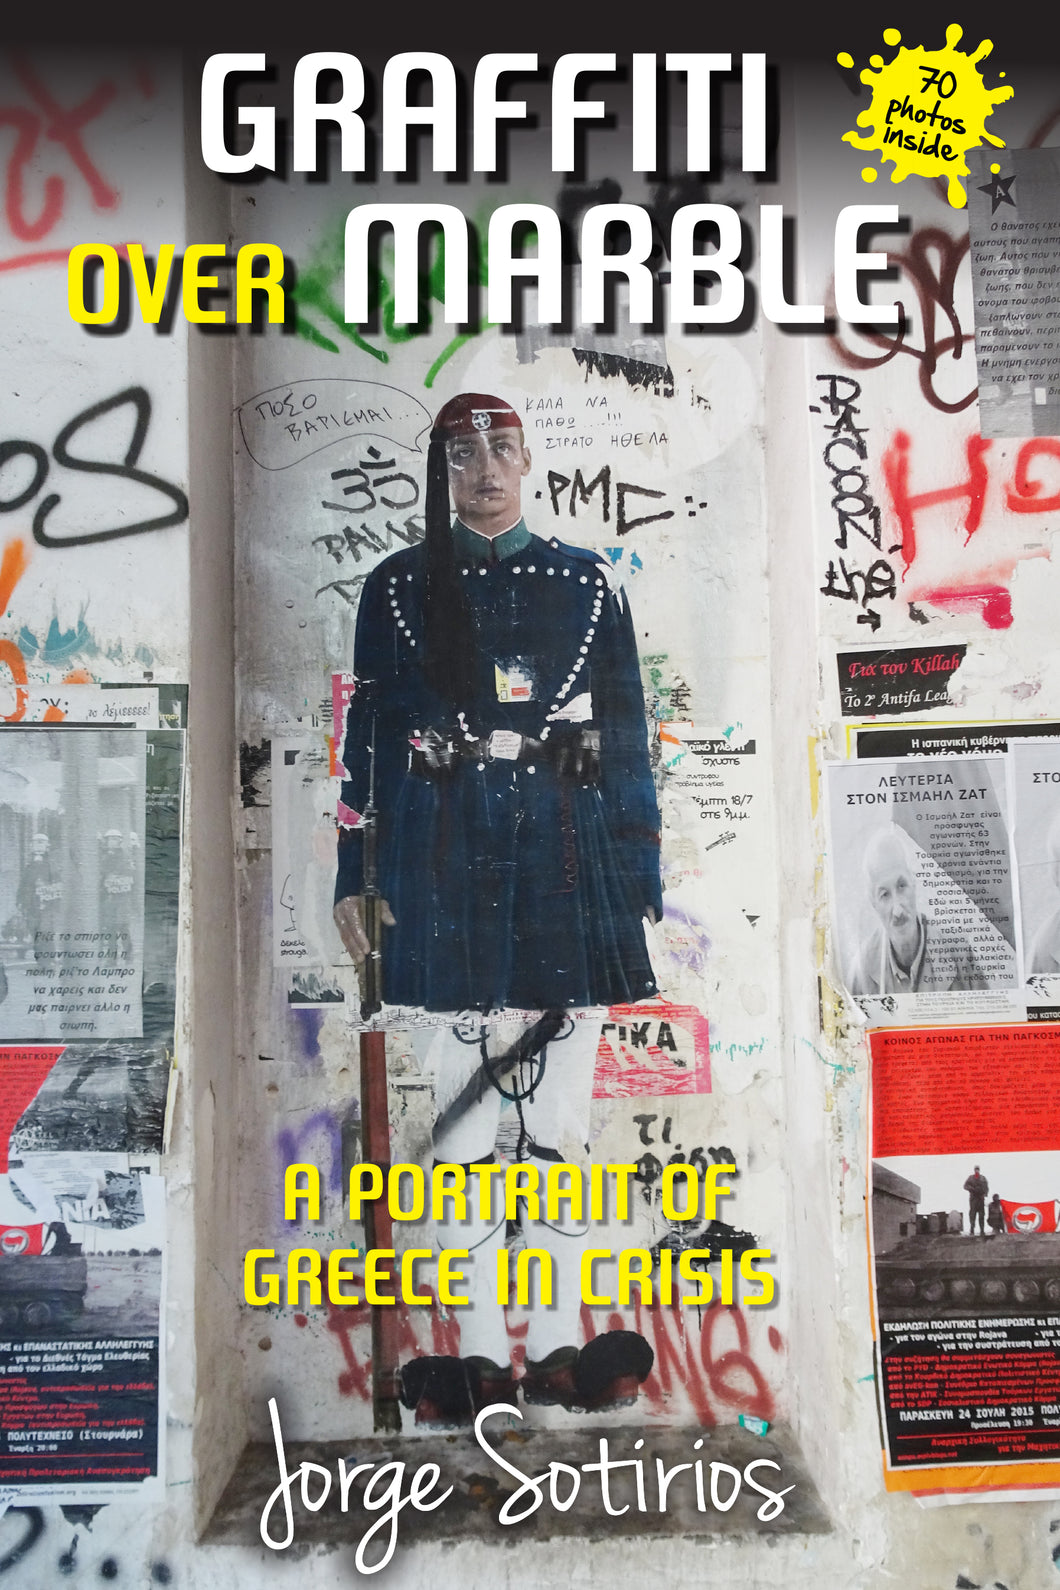 Graffiti Over Marble: A Portrait of Greece in Crisis